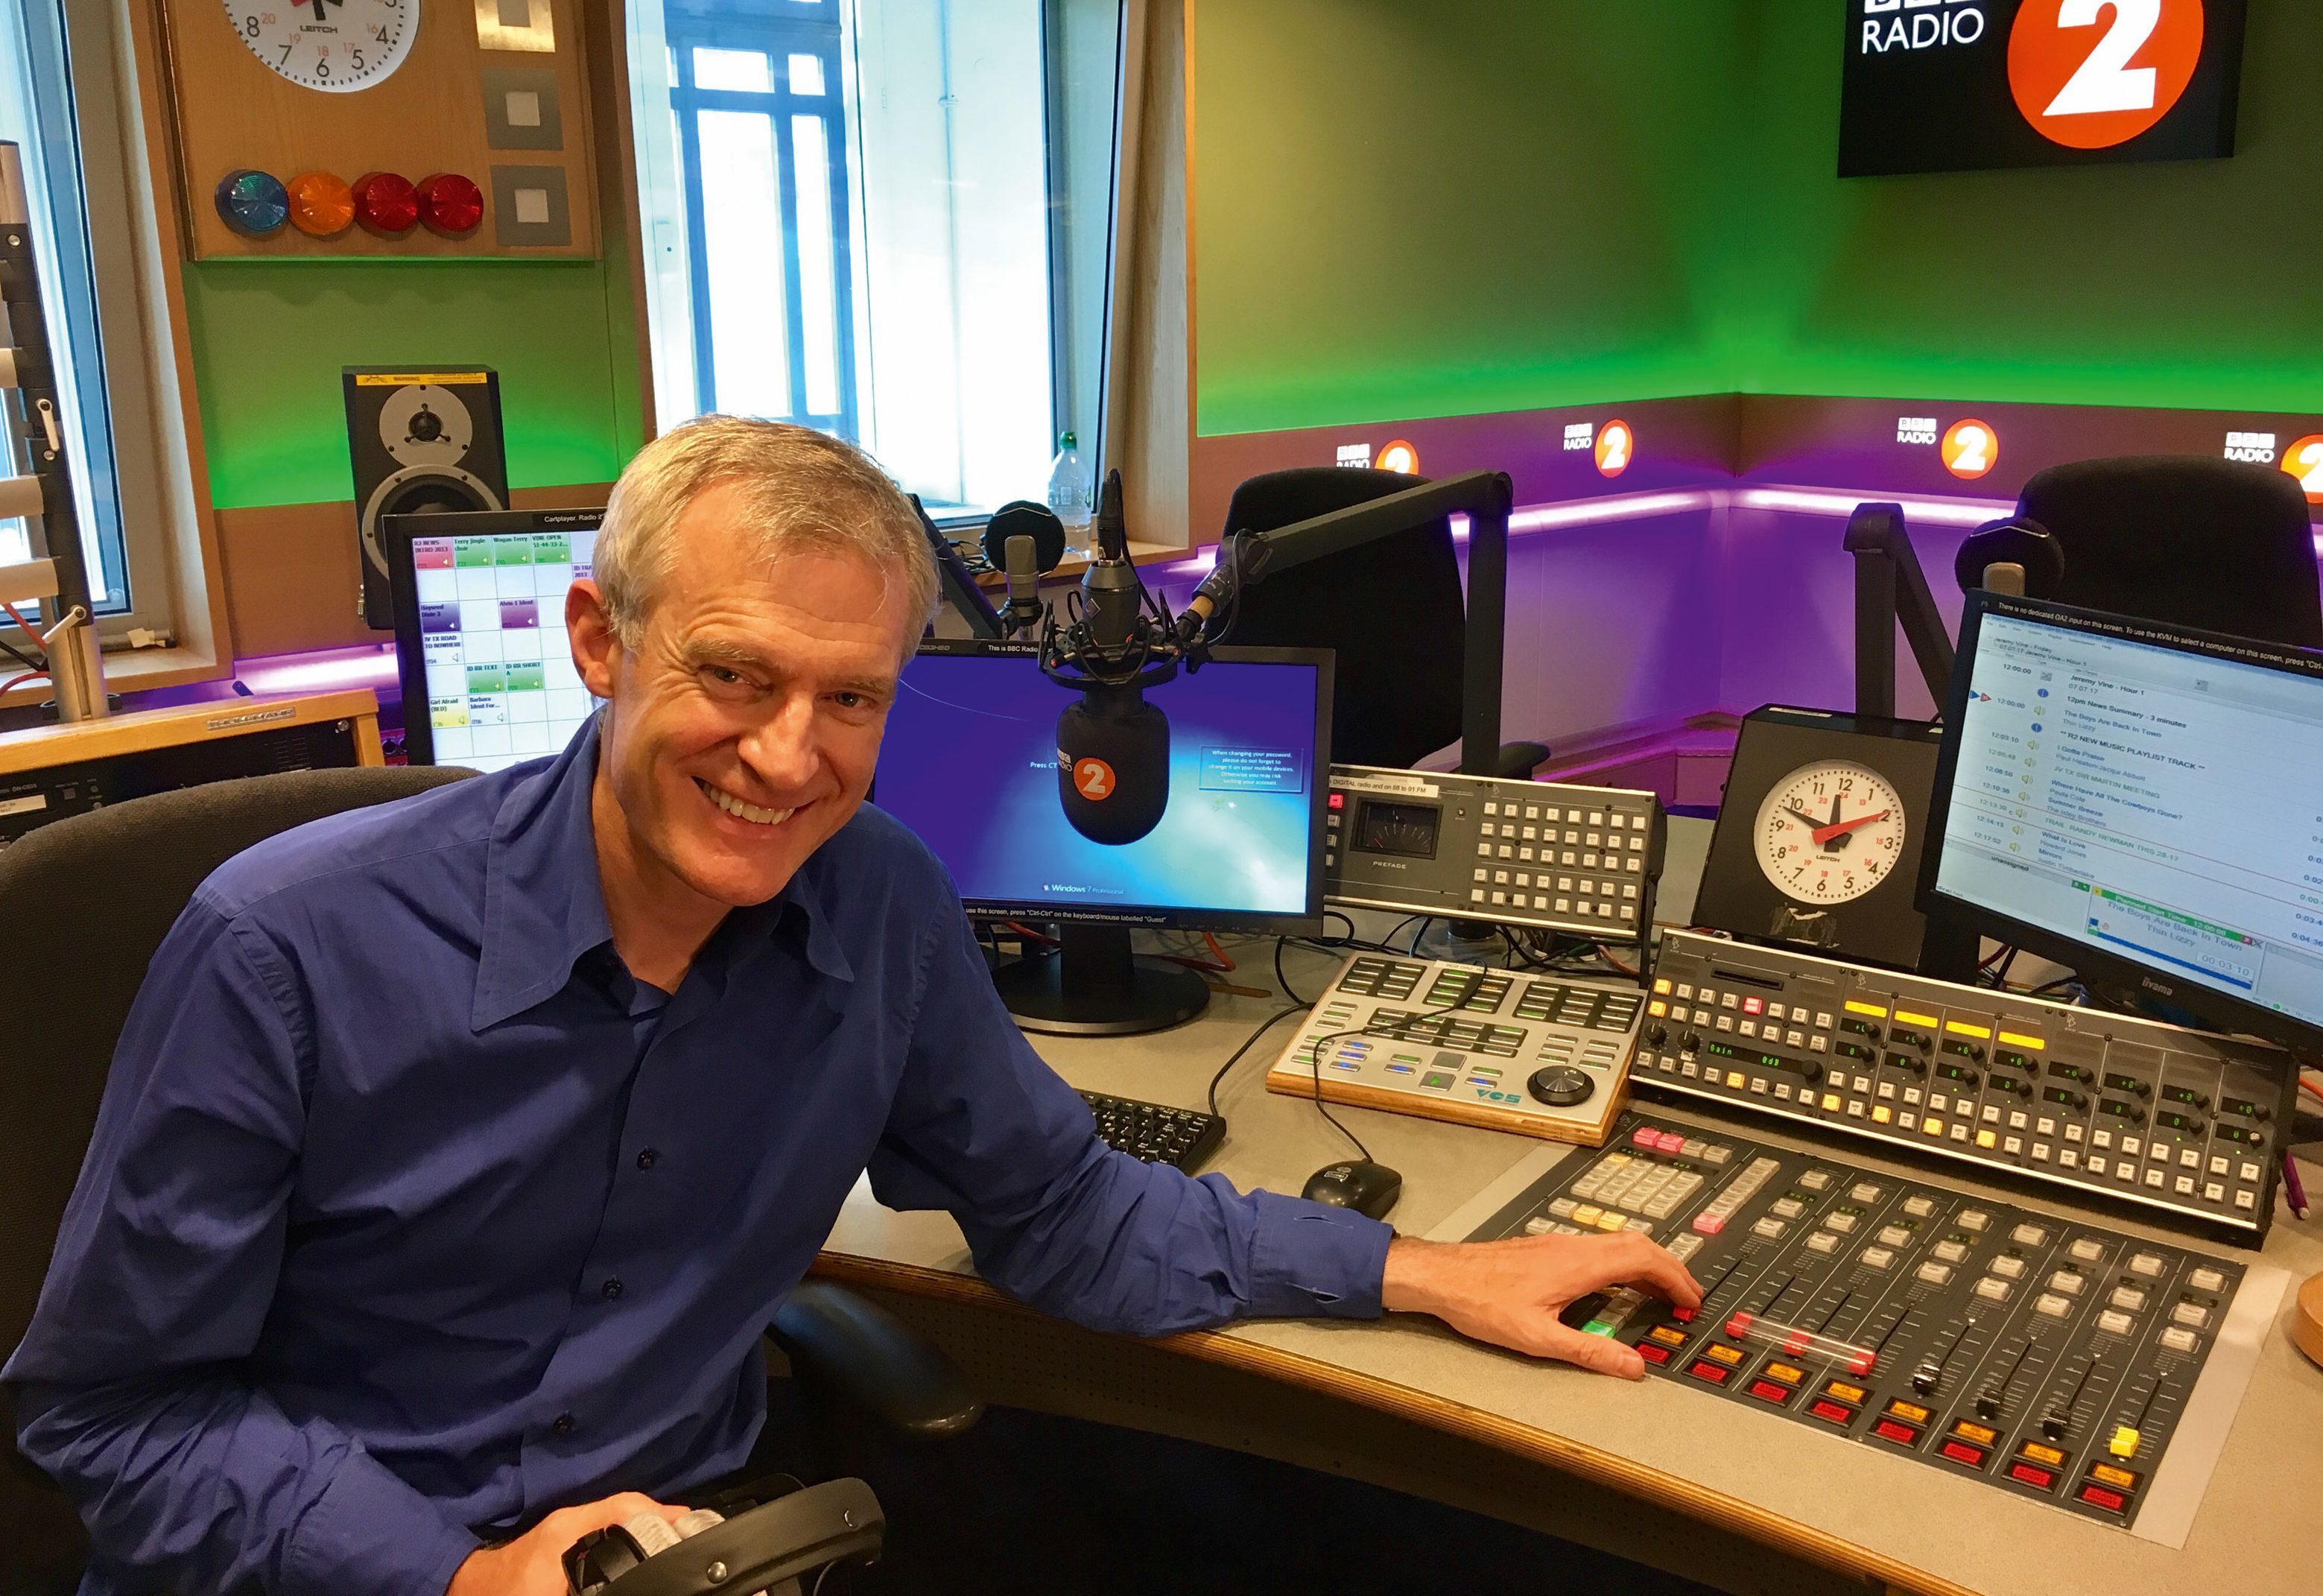 Jeremy Vine in the Radio 2 studio (PA Photo / Weidenfeld and Nicolson)